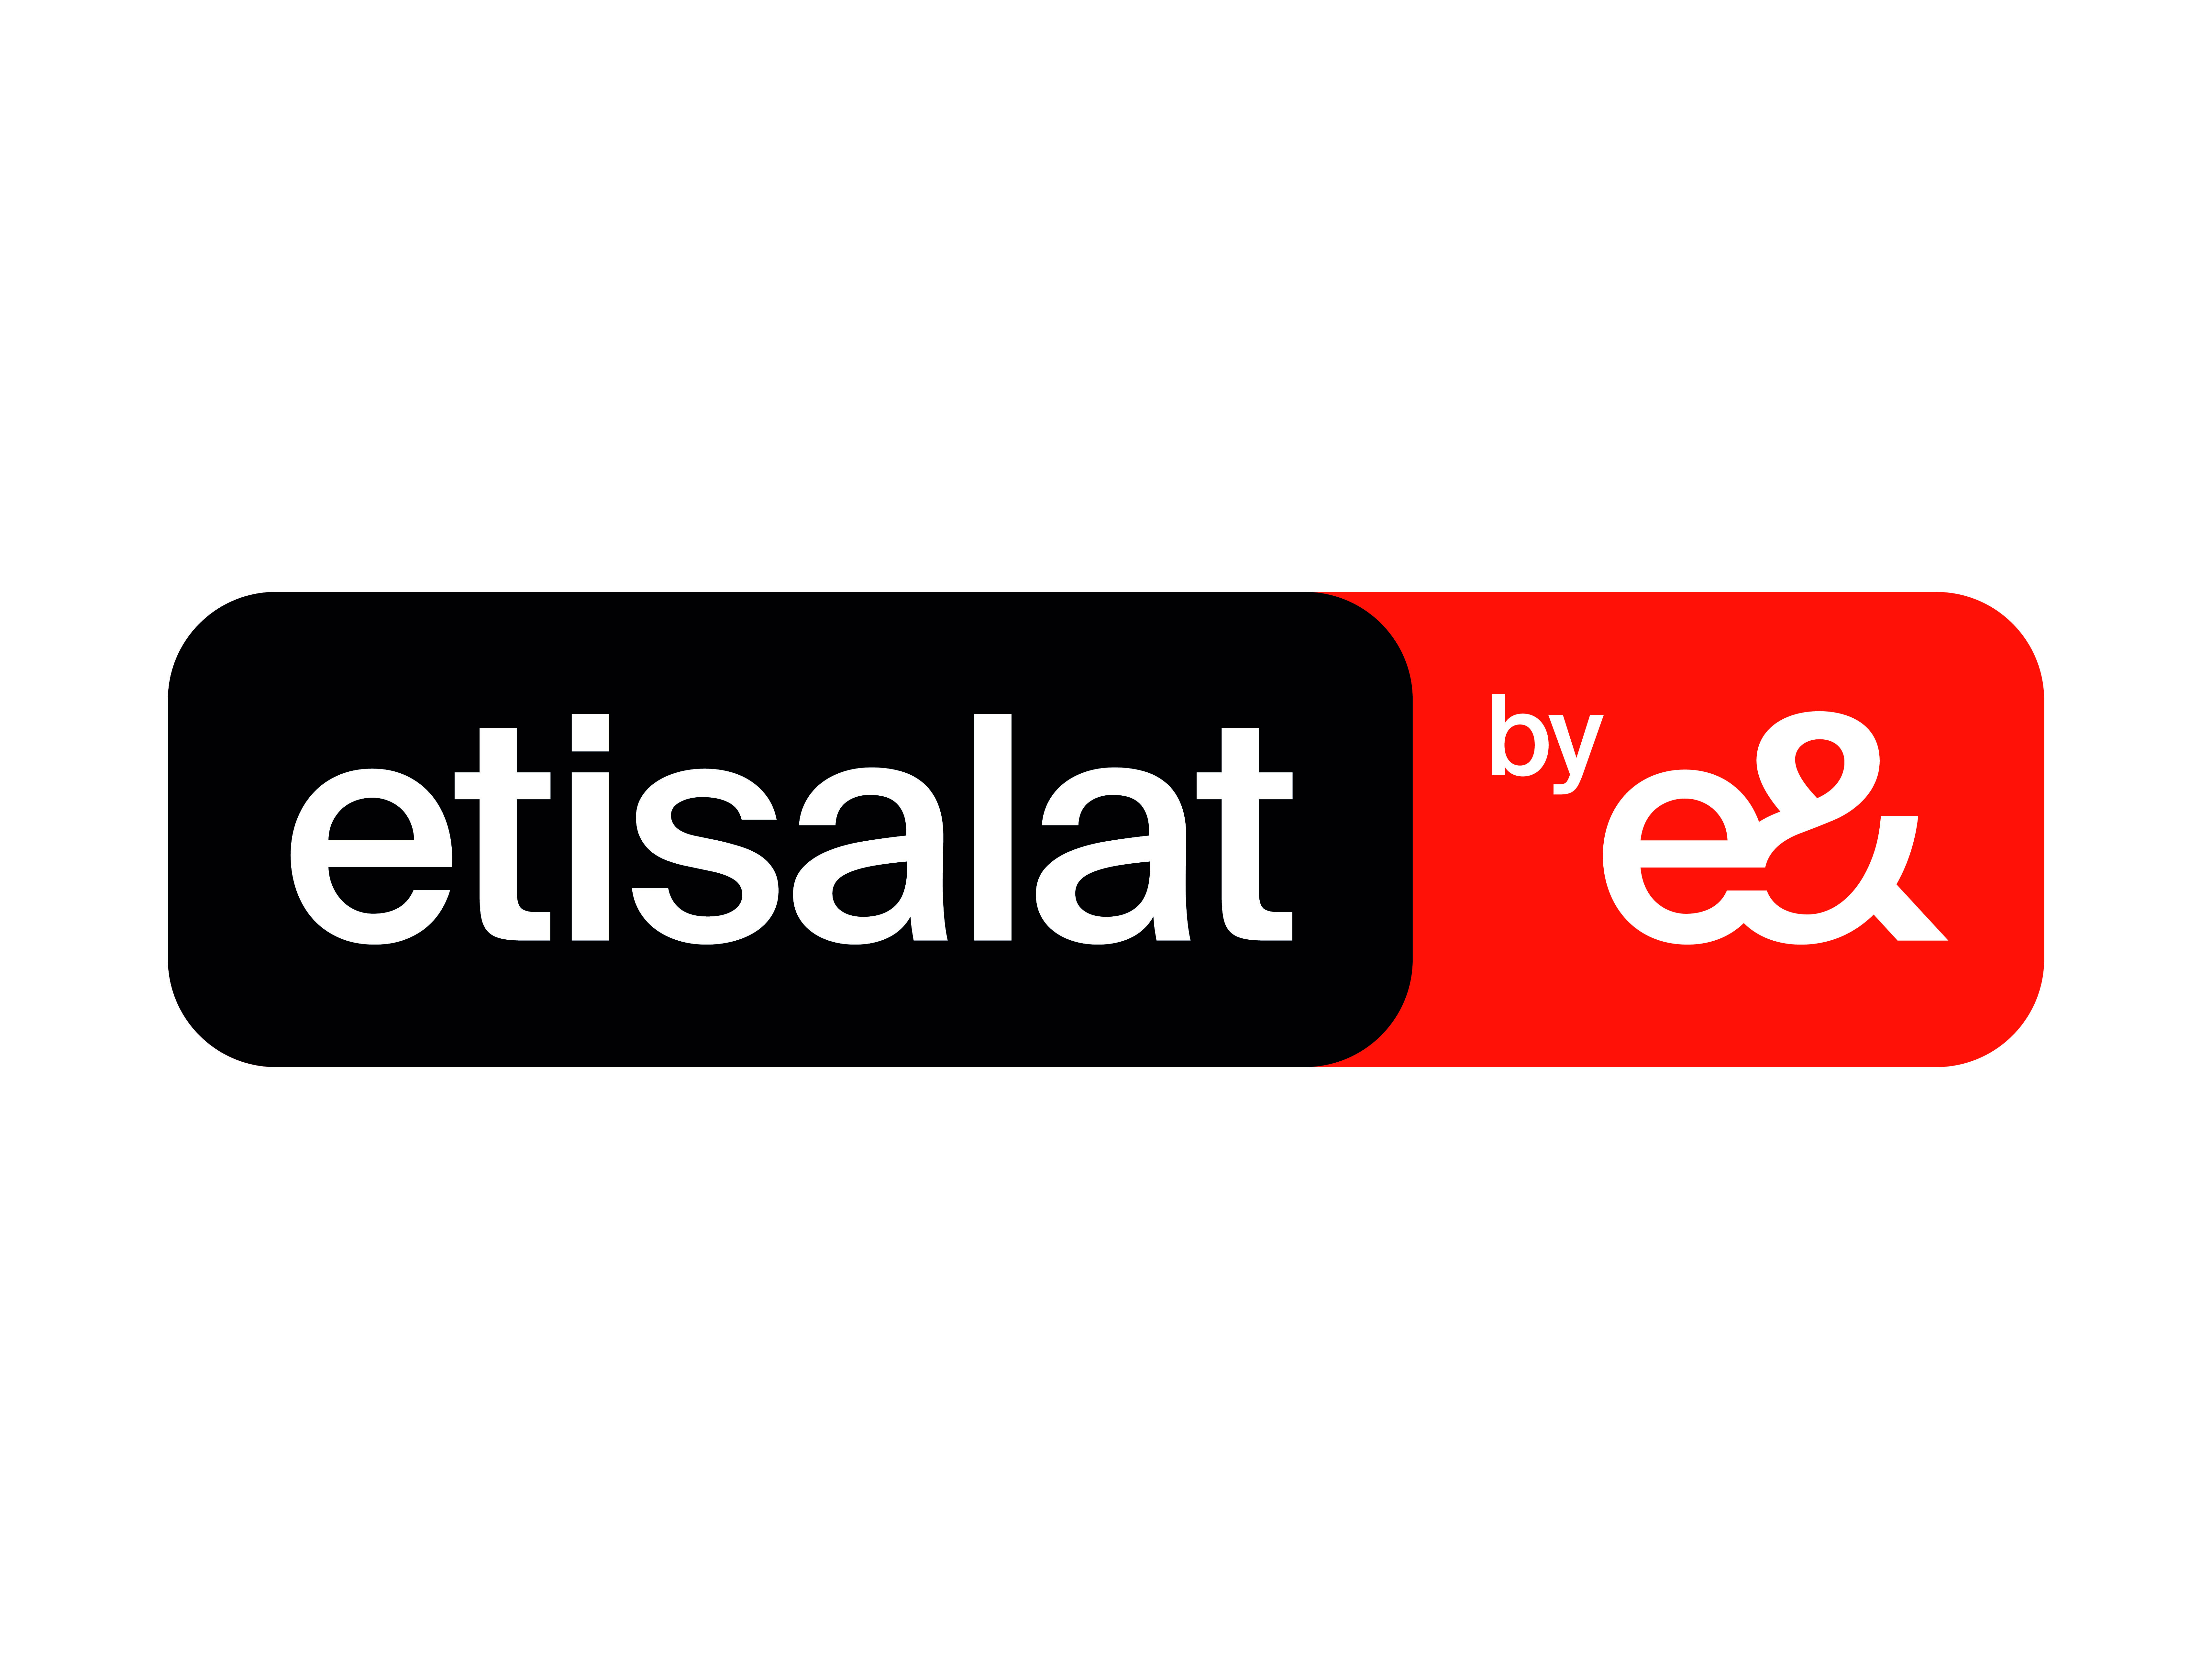 Etisalat UAE rebrands as etisalat by e& reflecting recent e& Group positioning